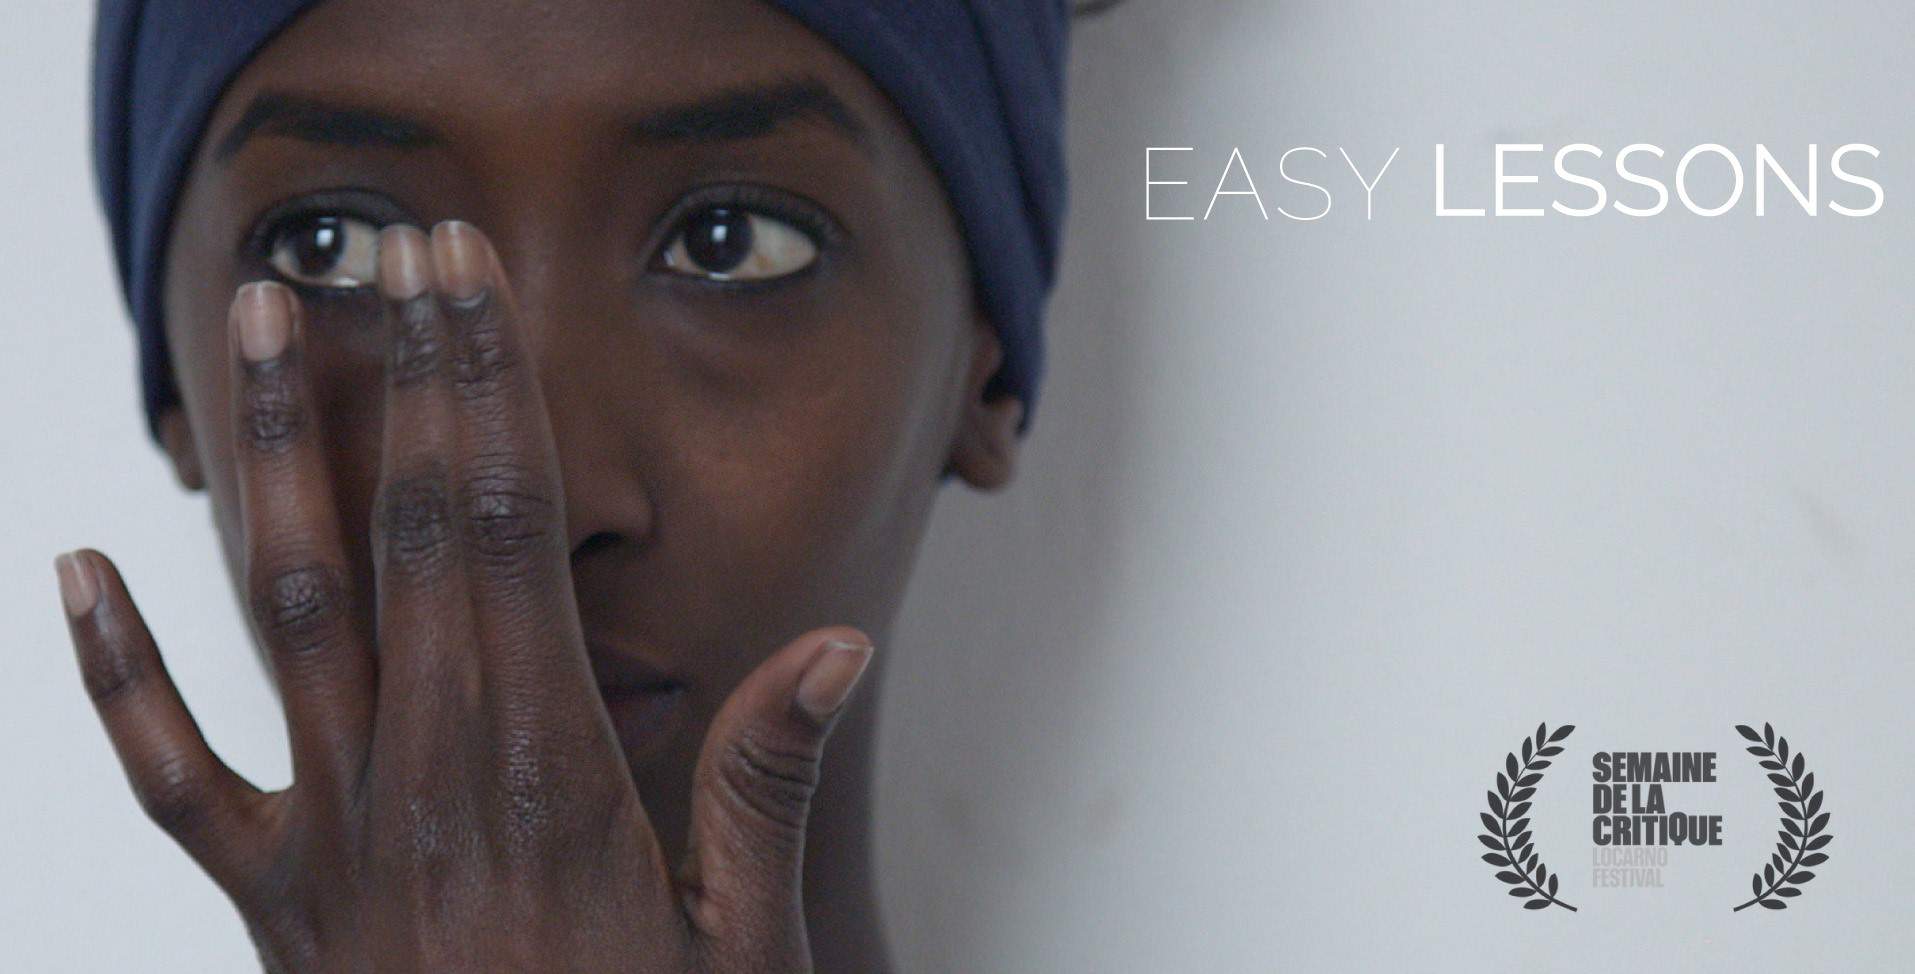 könnyű leckék lecții ușoare documentar refugiat